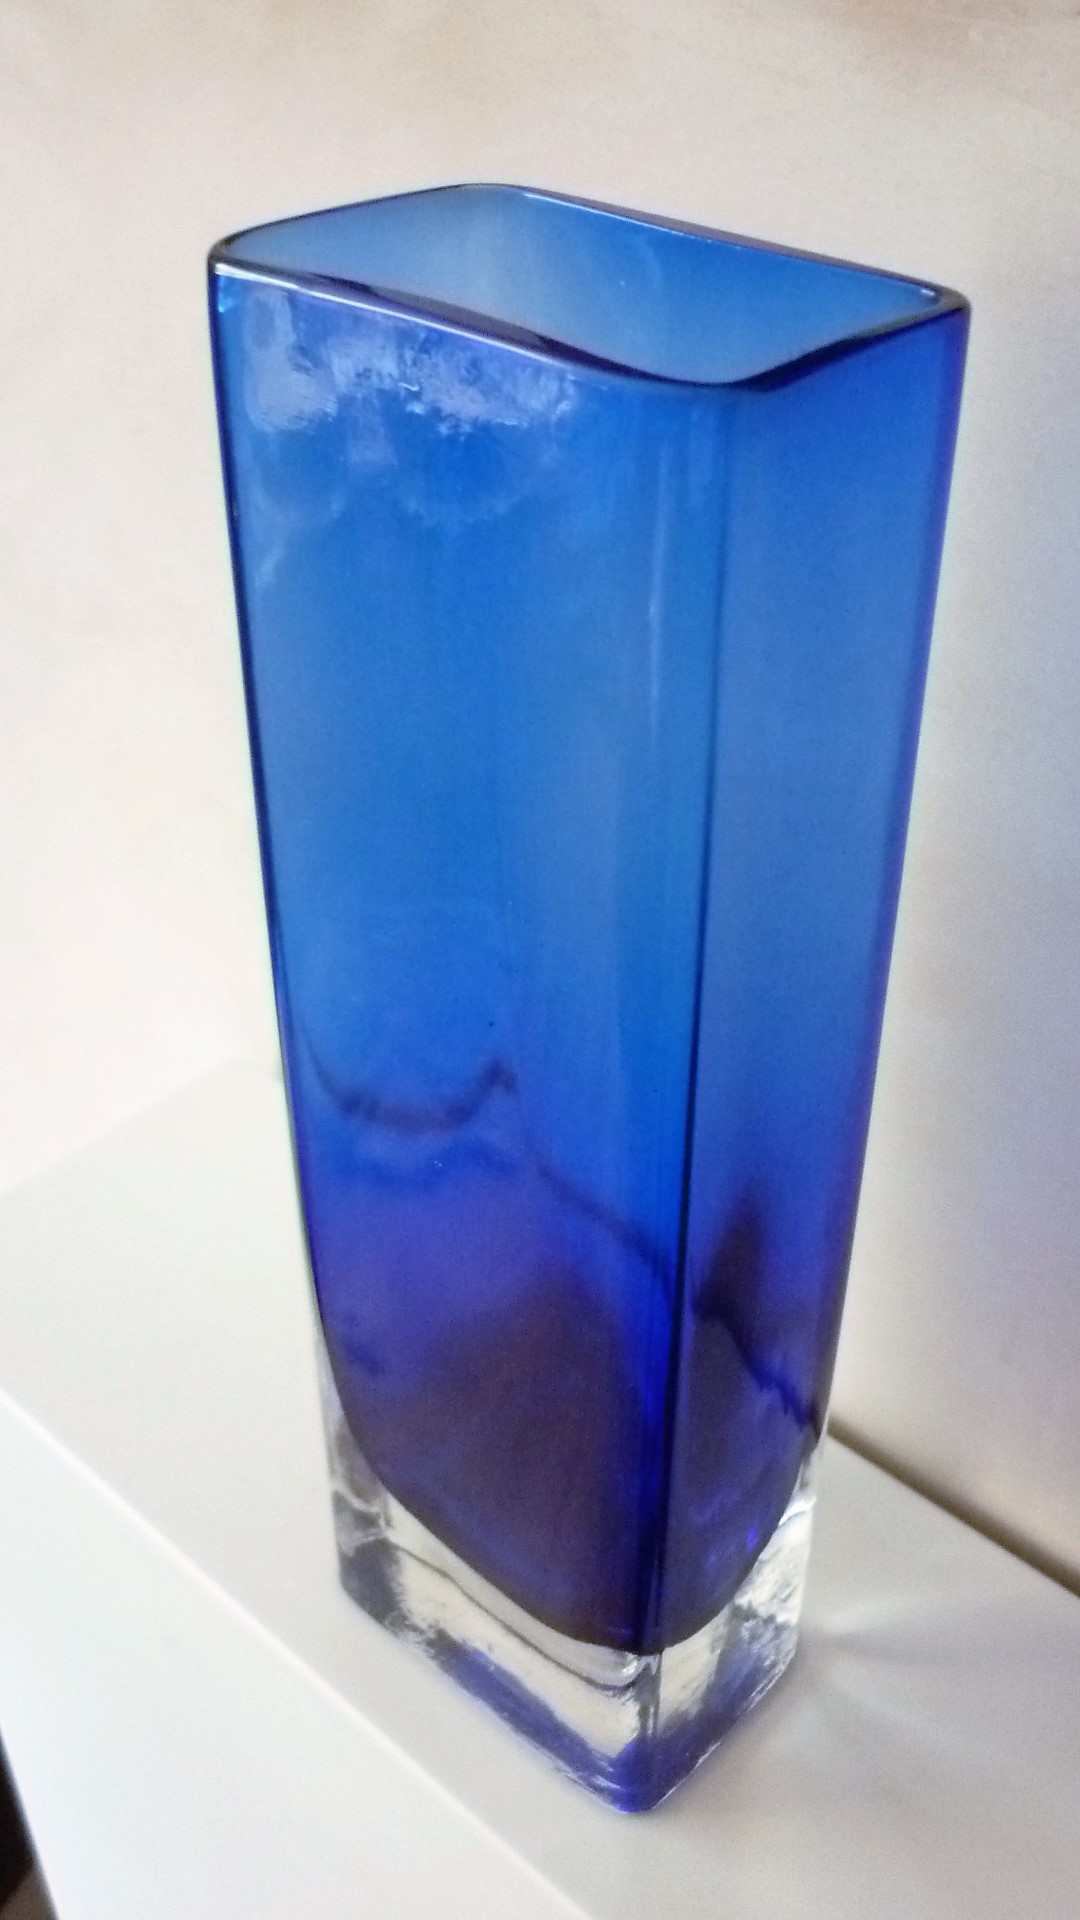 Lindshammar Rectangular Blue Glass vase by Gunnar Ander